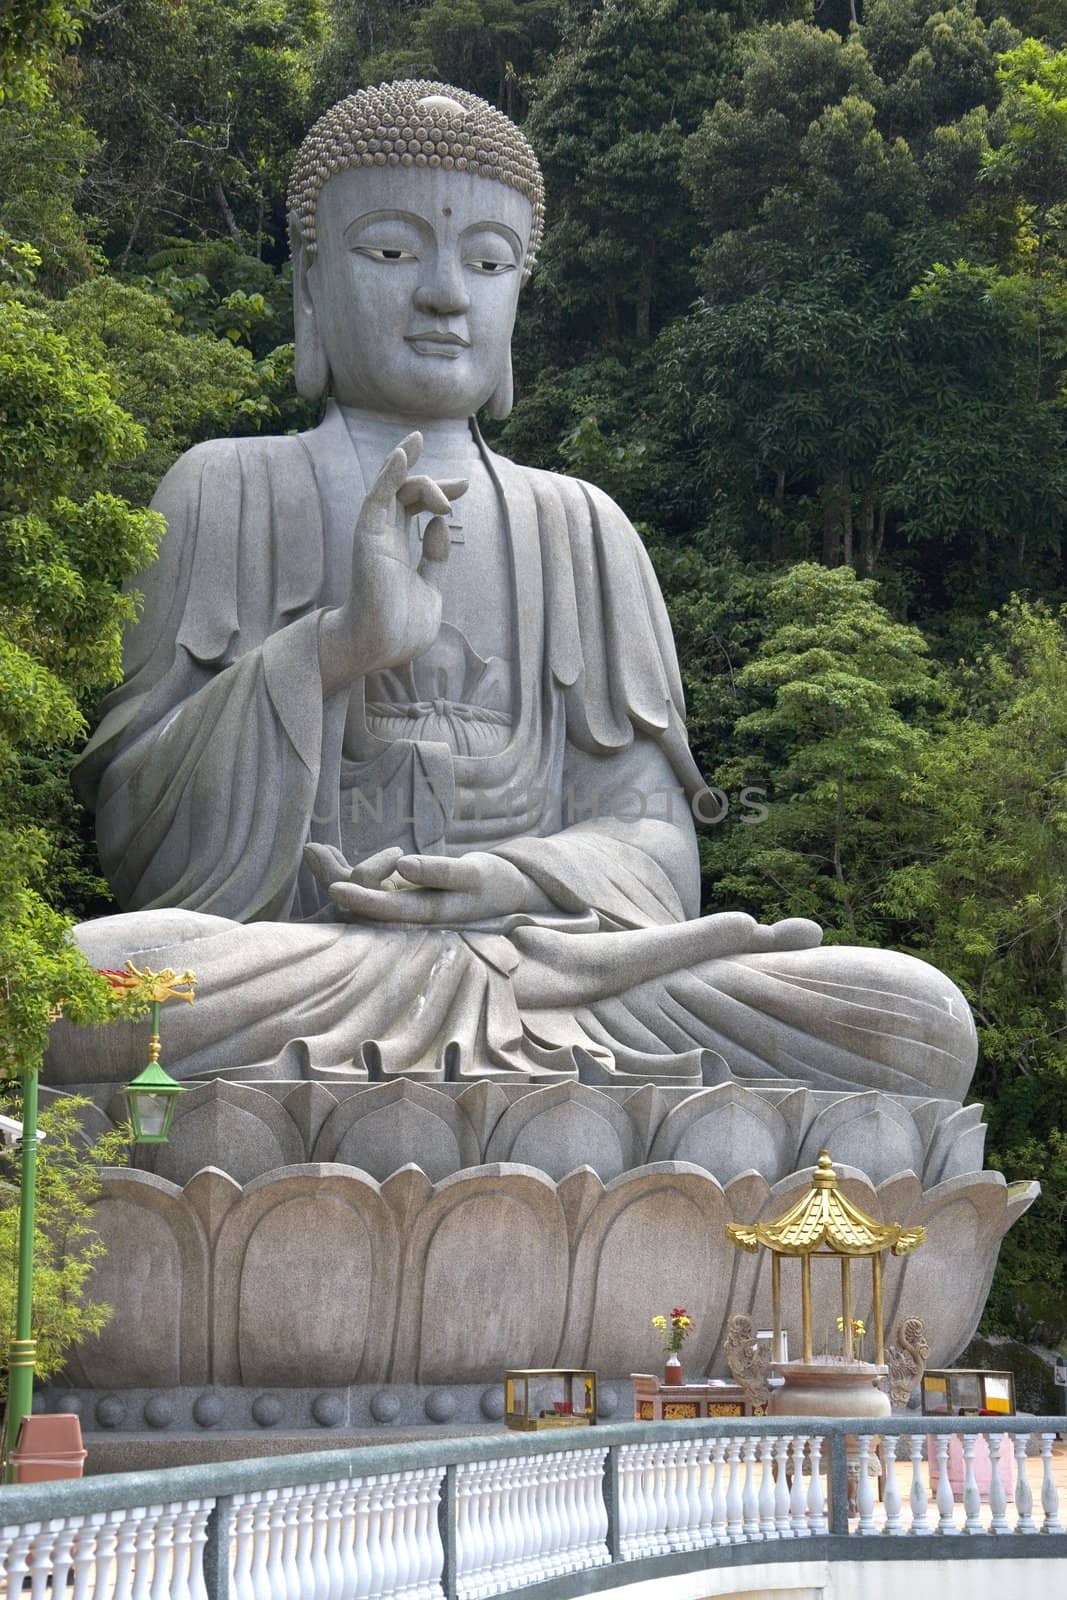 Giant granite Buddha statue in Malaysia.